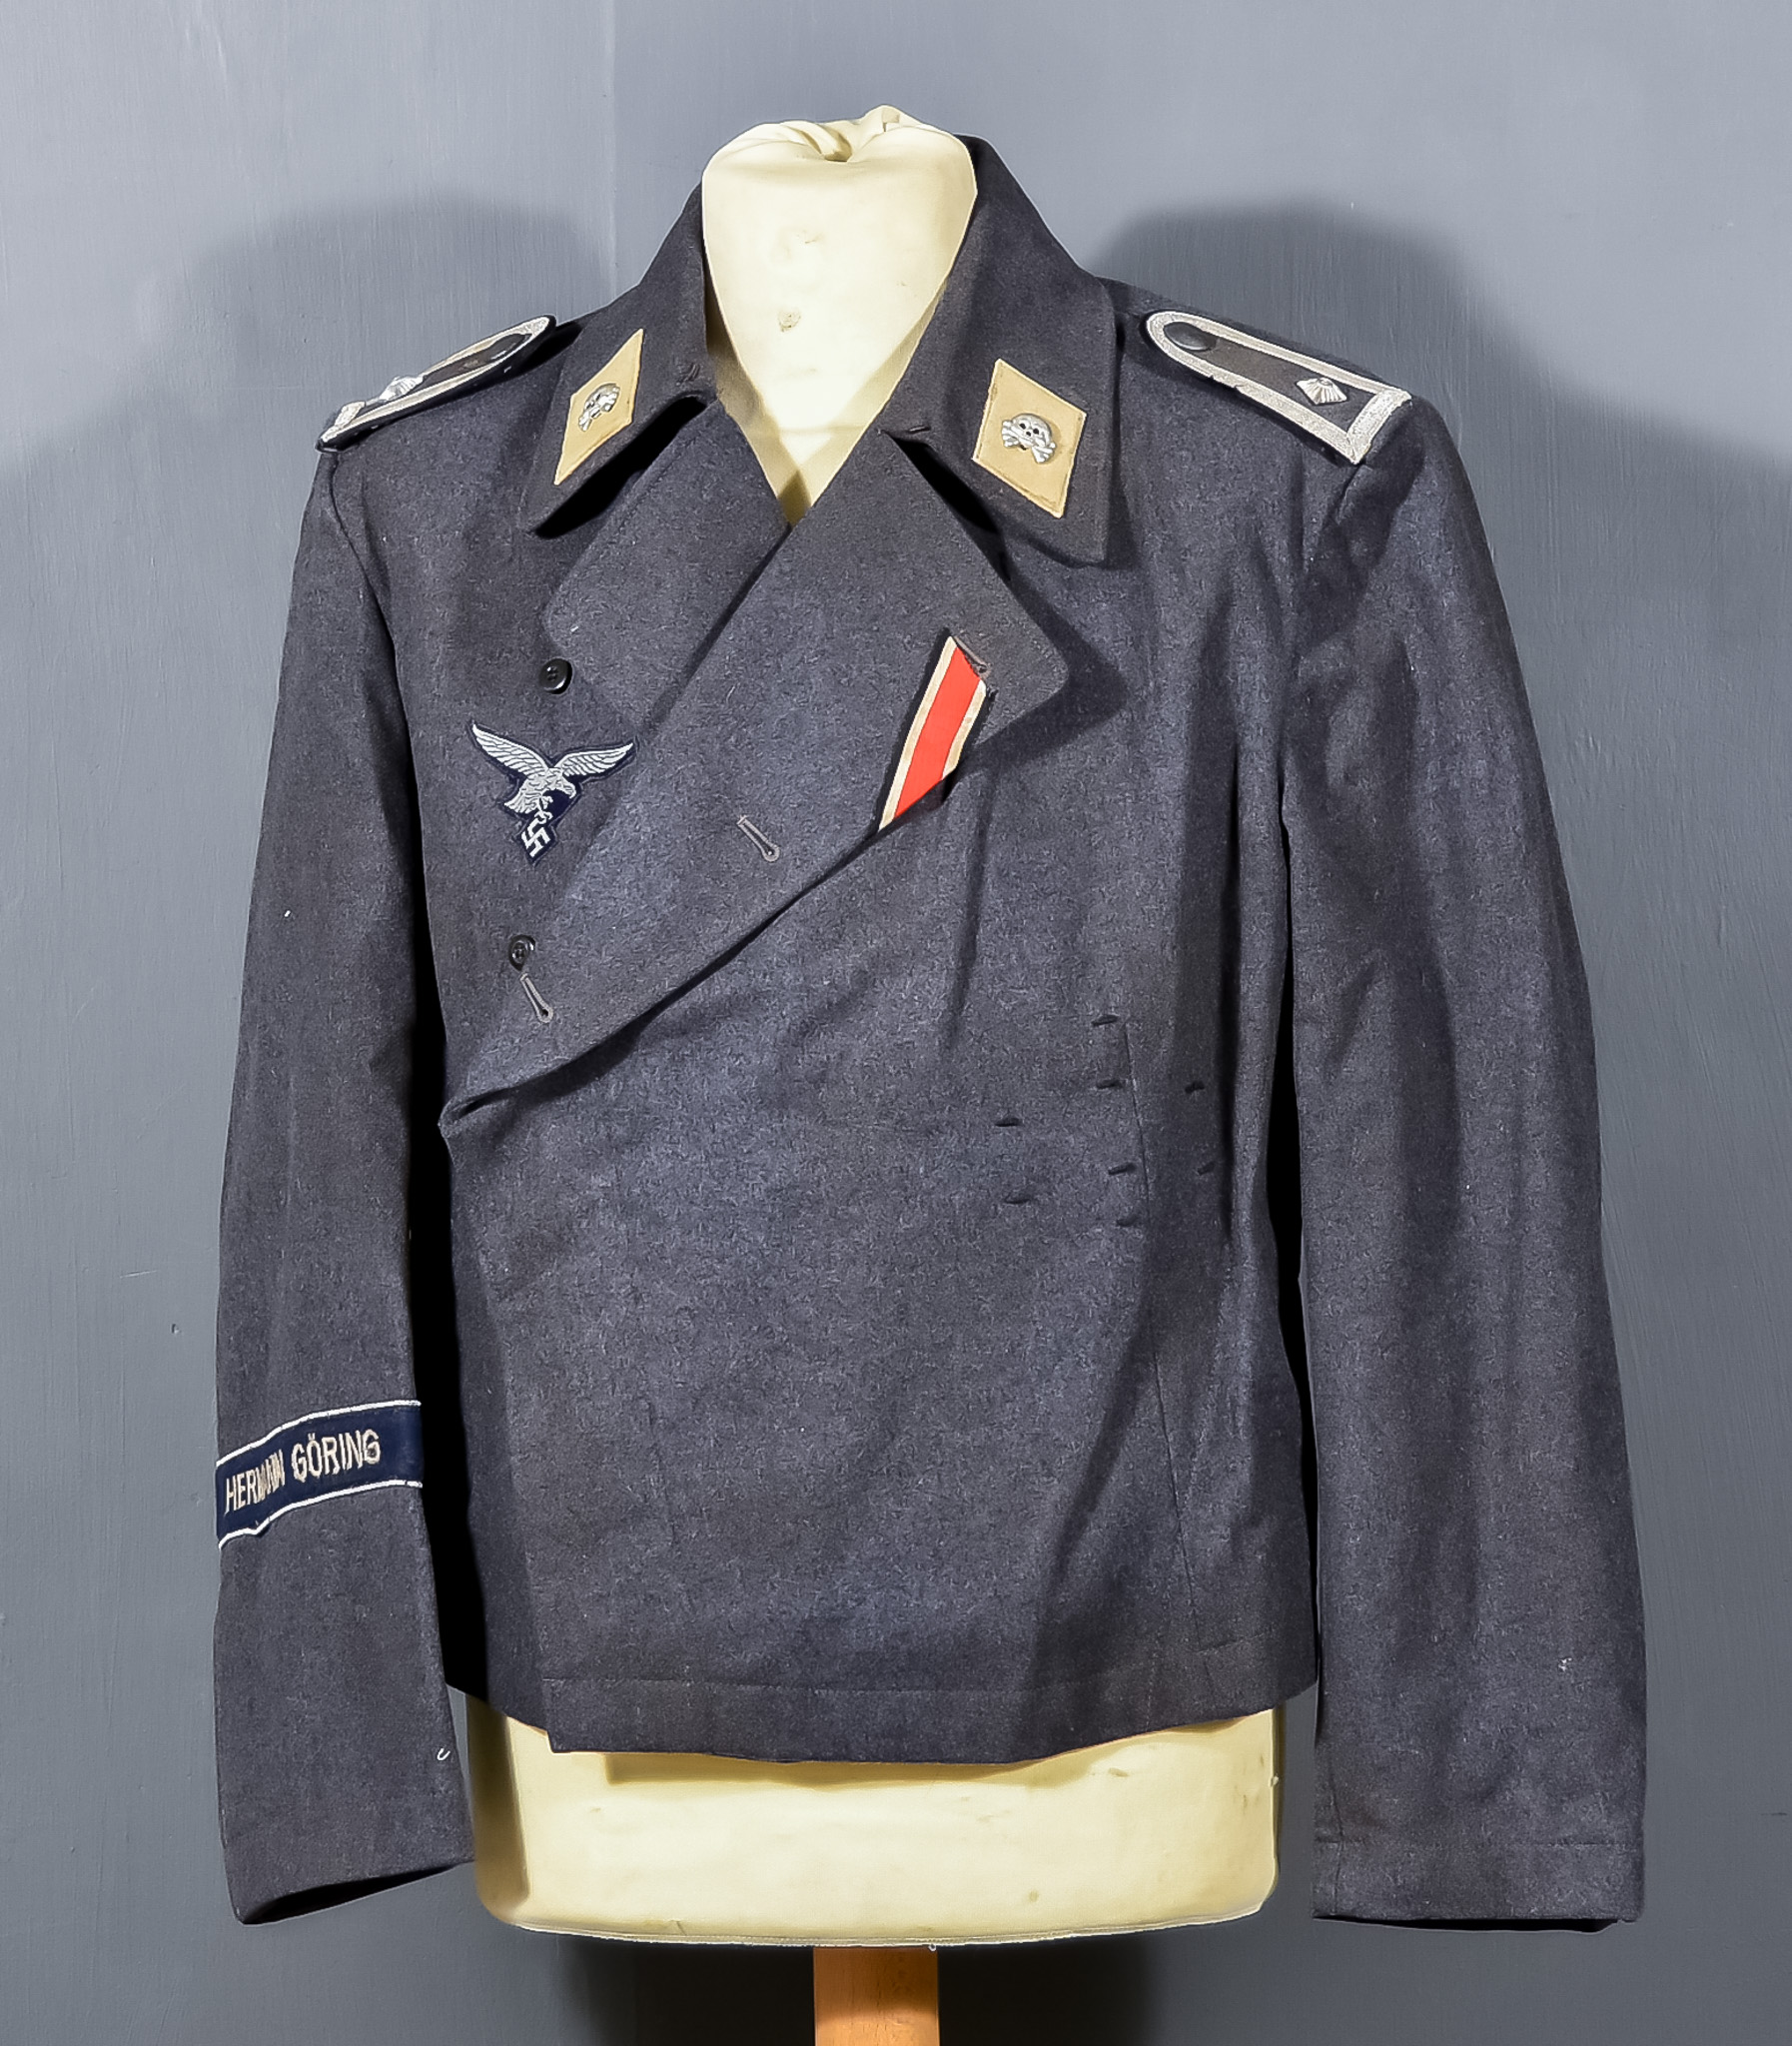 A German World War II 'Hermann Göring' Regiment Tunic, no markings or tags, fabricated from field